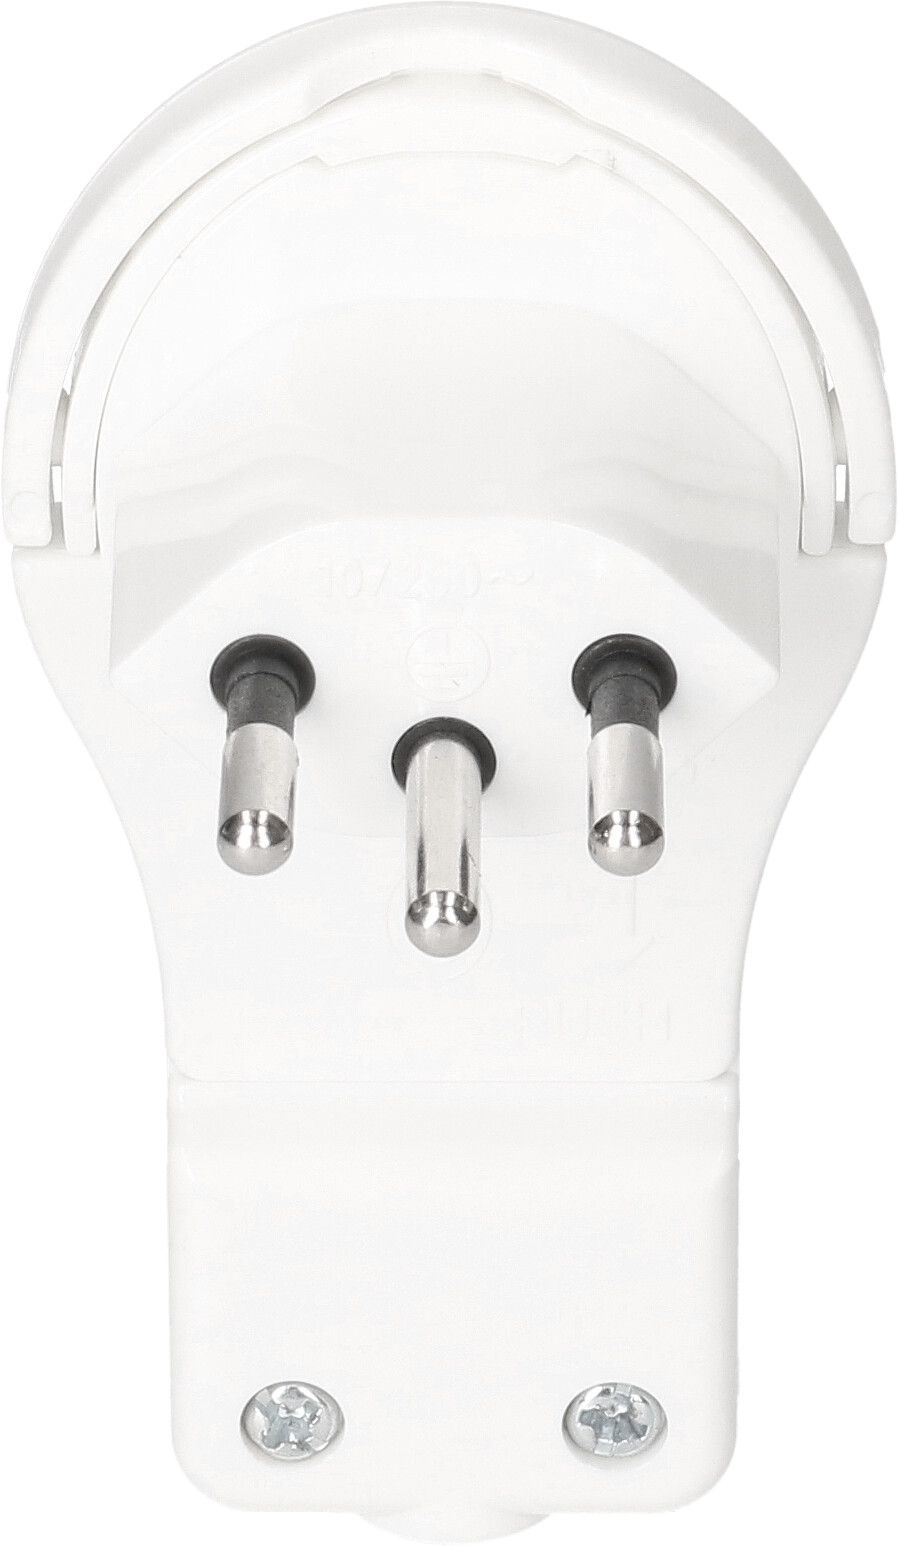 Rewireable flat plug white - MAX HAURI AG